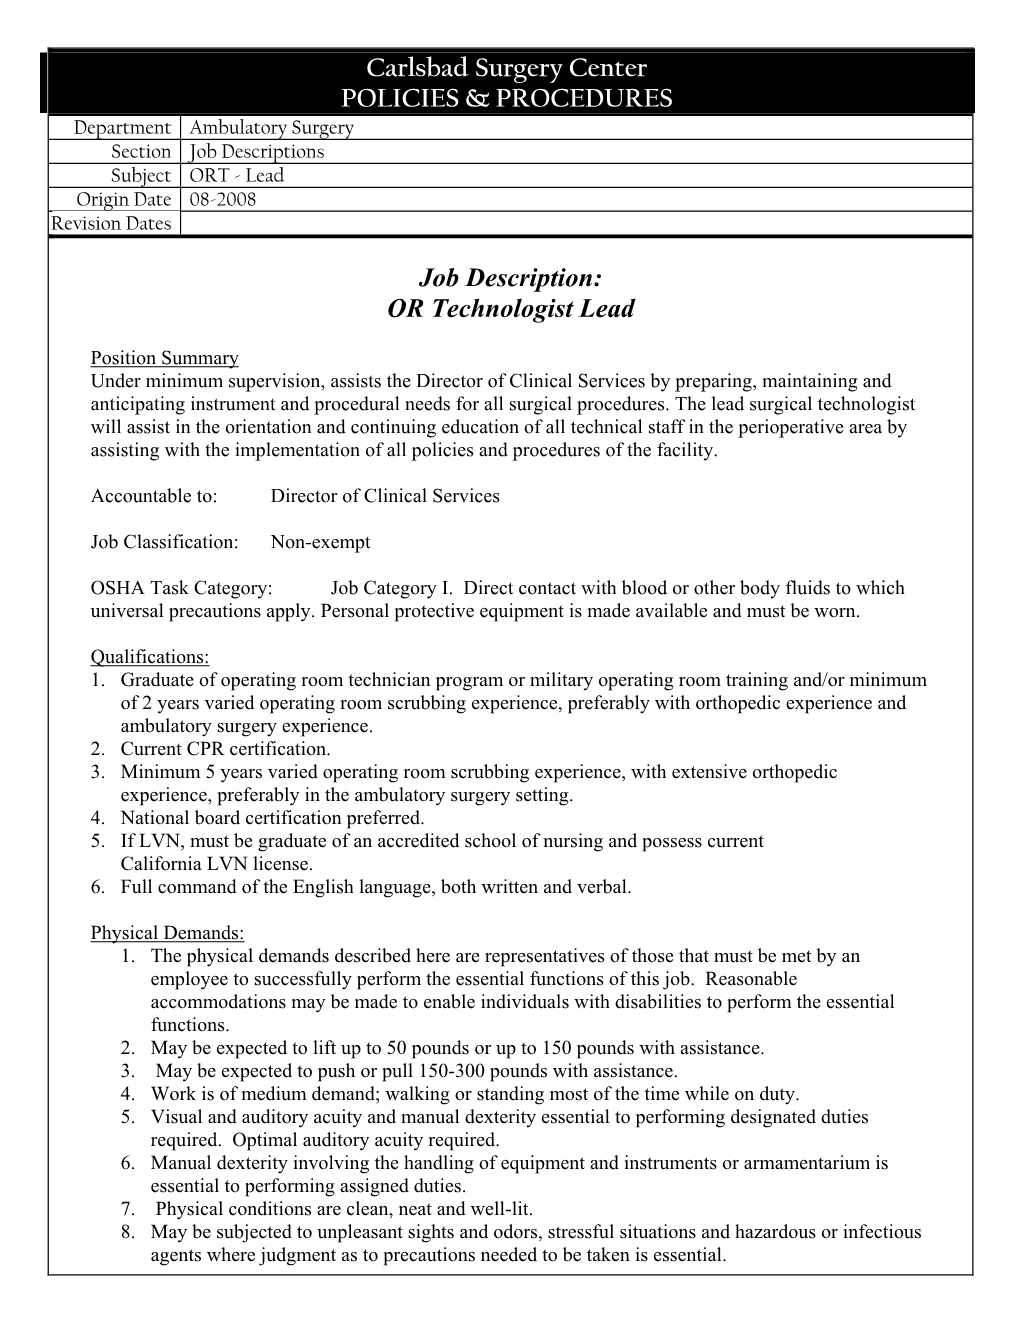 Job Description: OR Technologist Lead